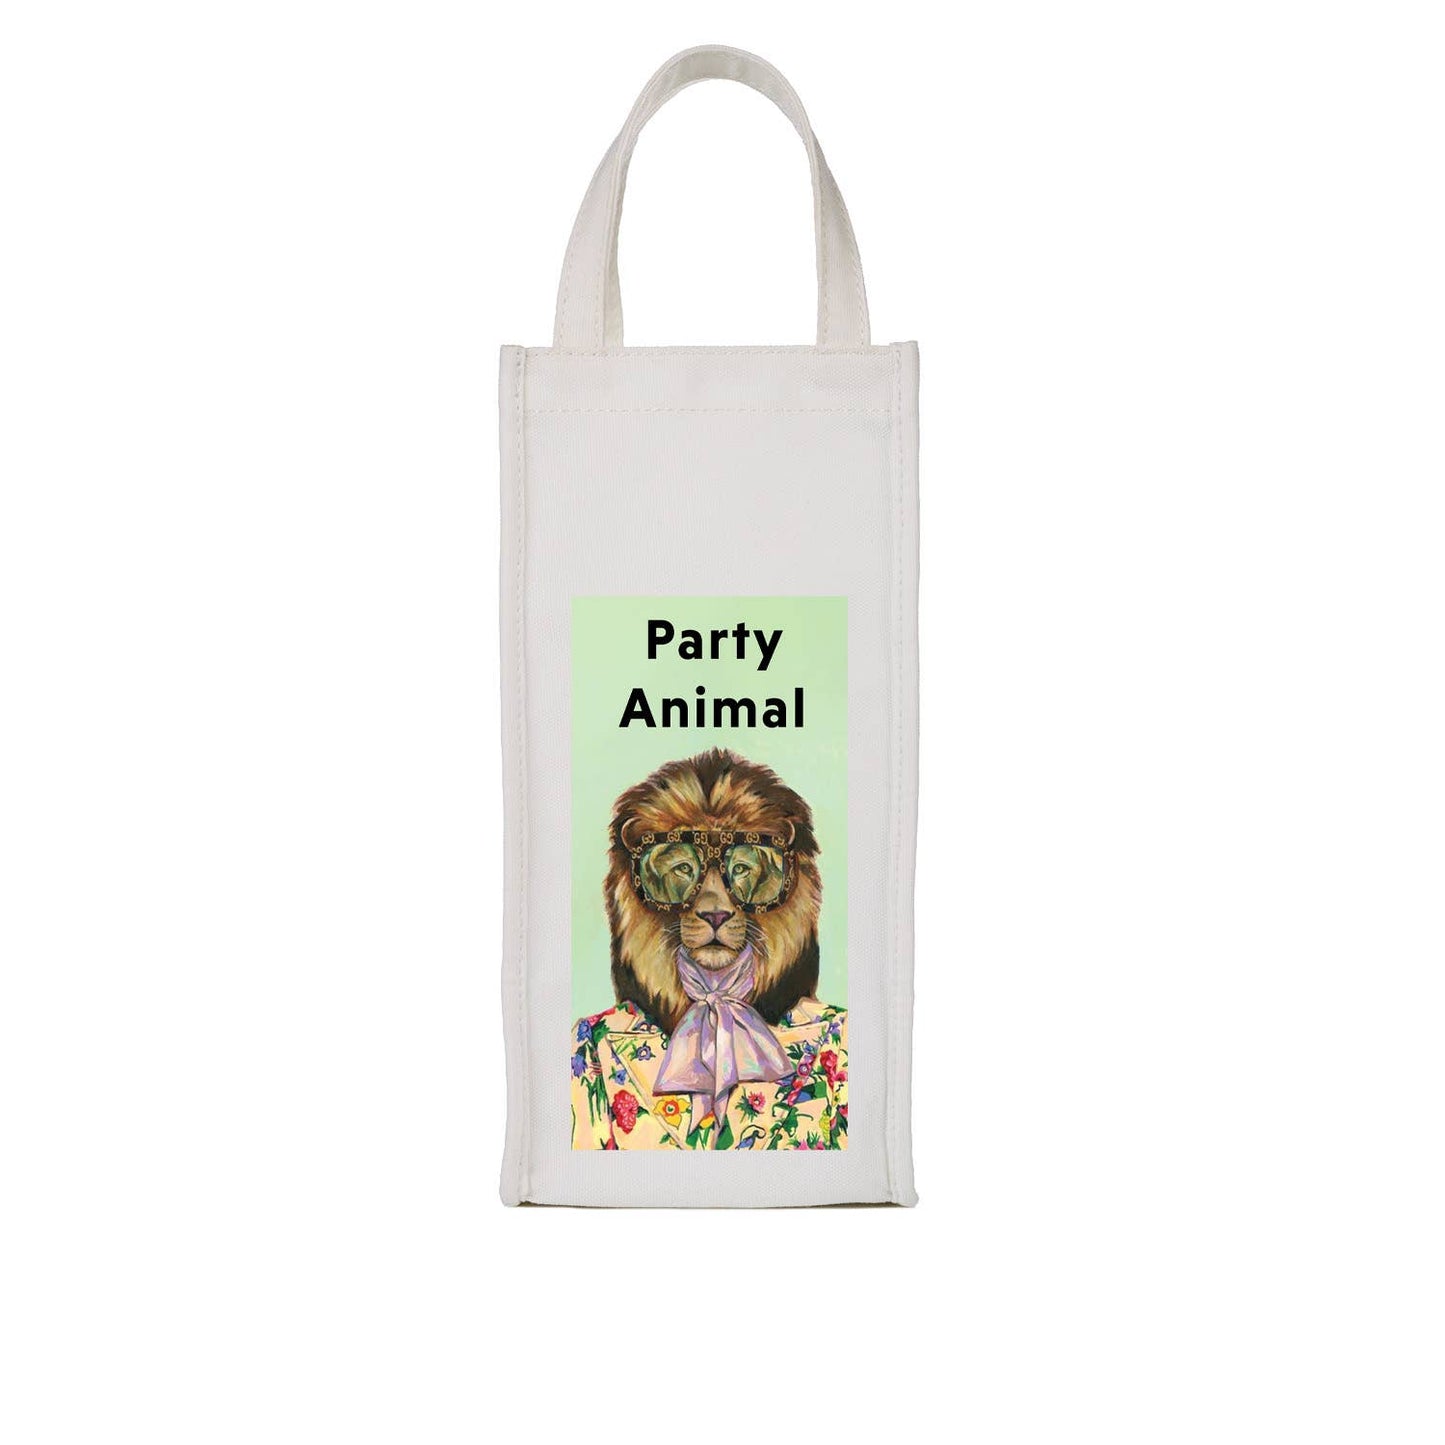 Party Animal Wine Bag